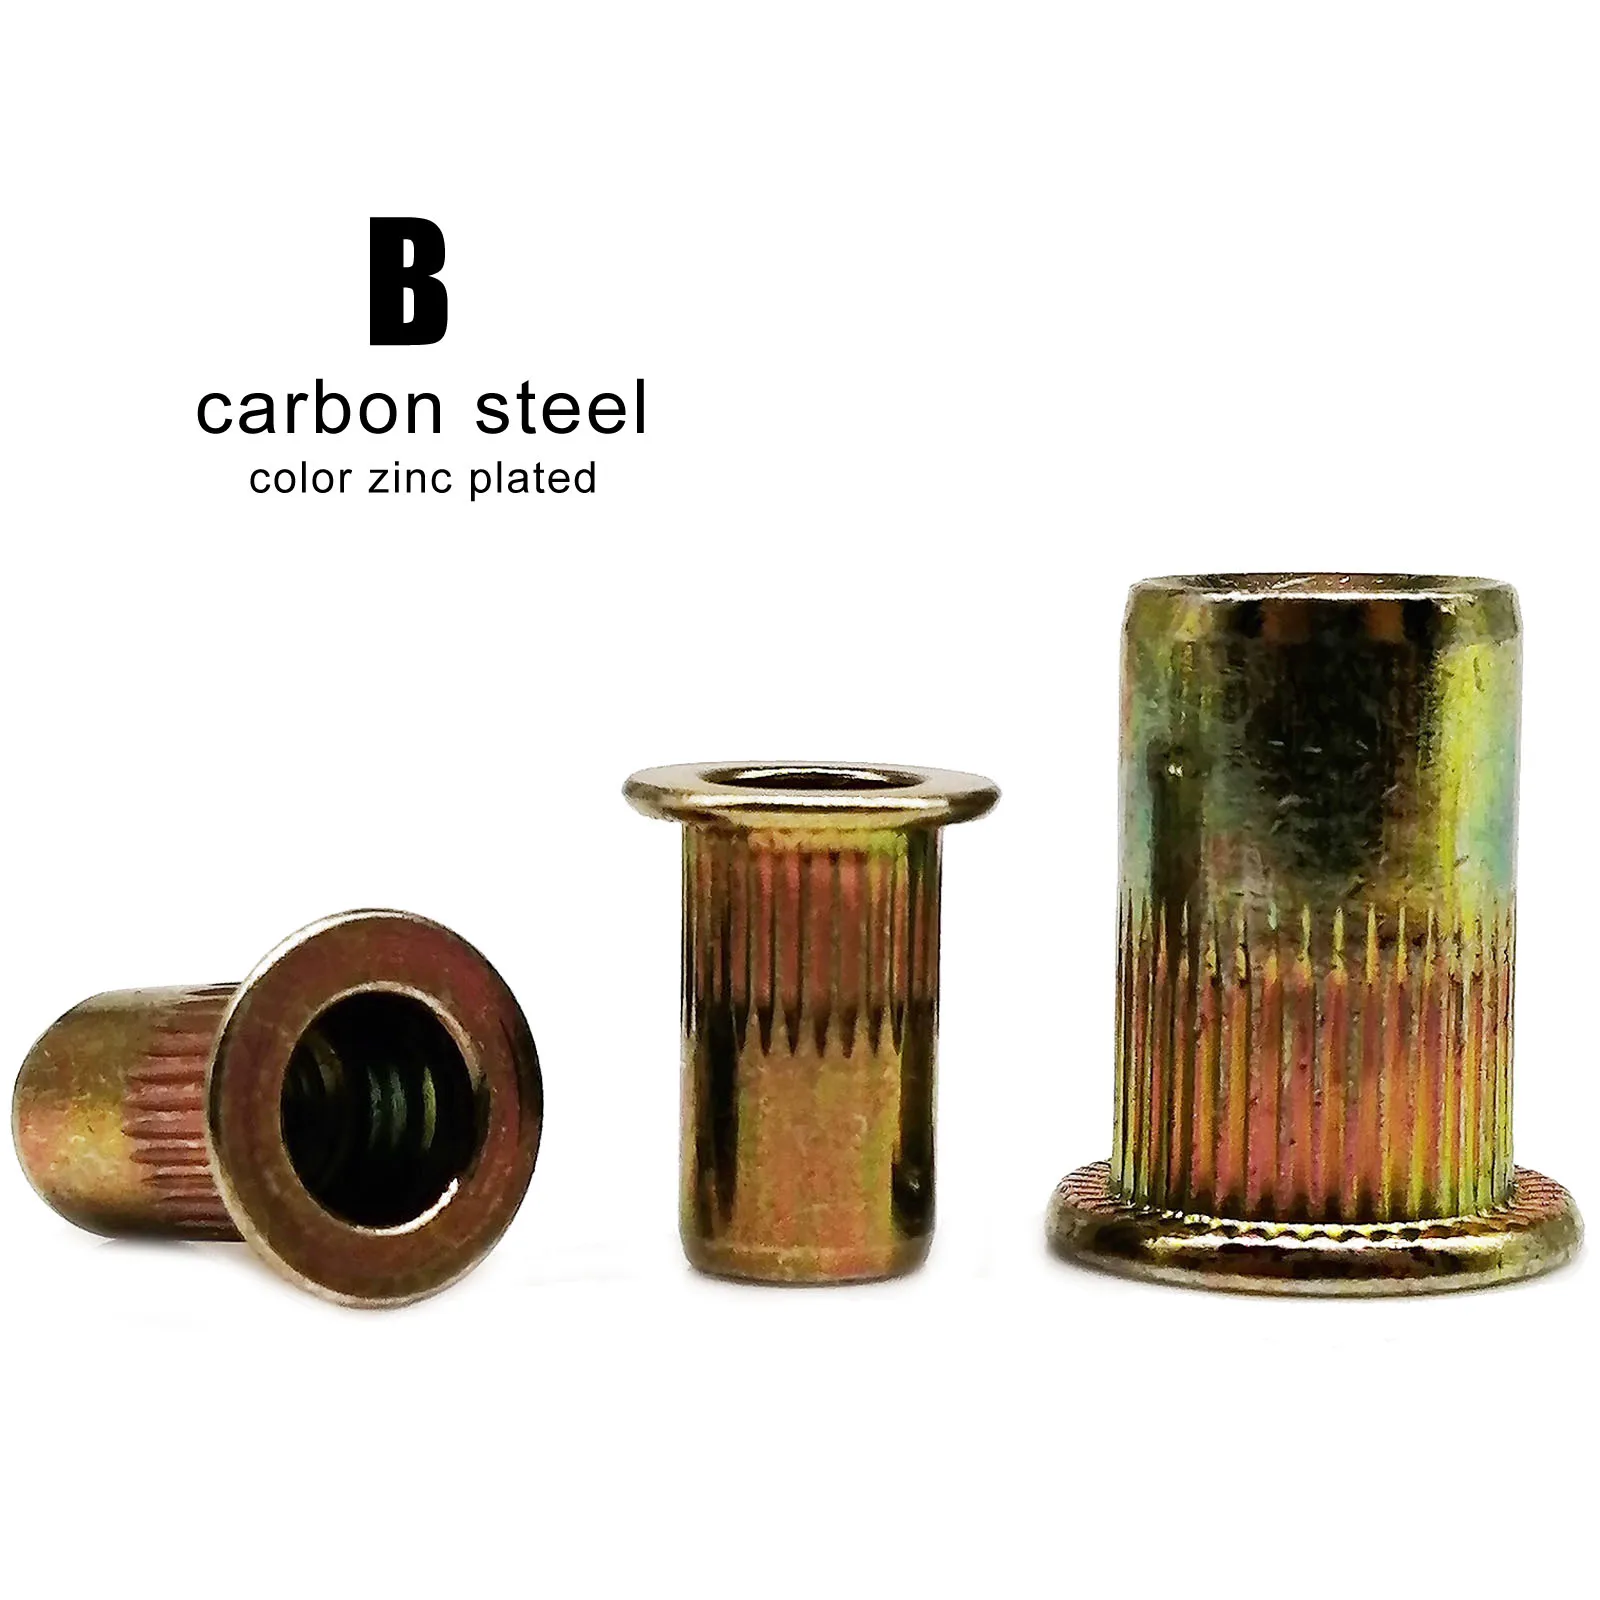 B carbon steel